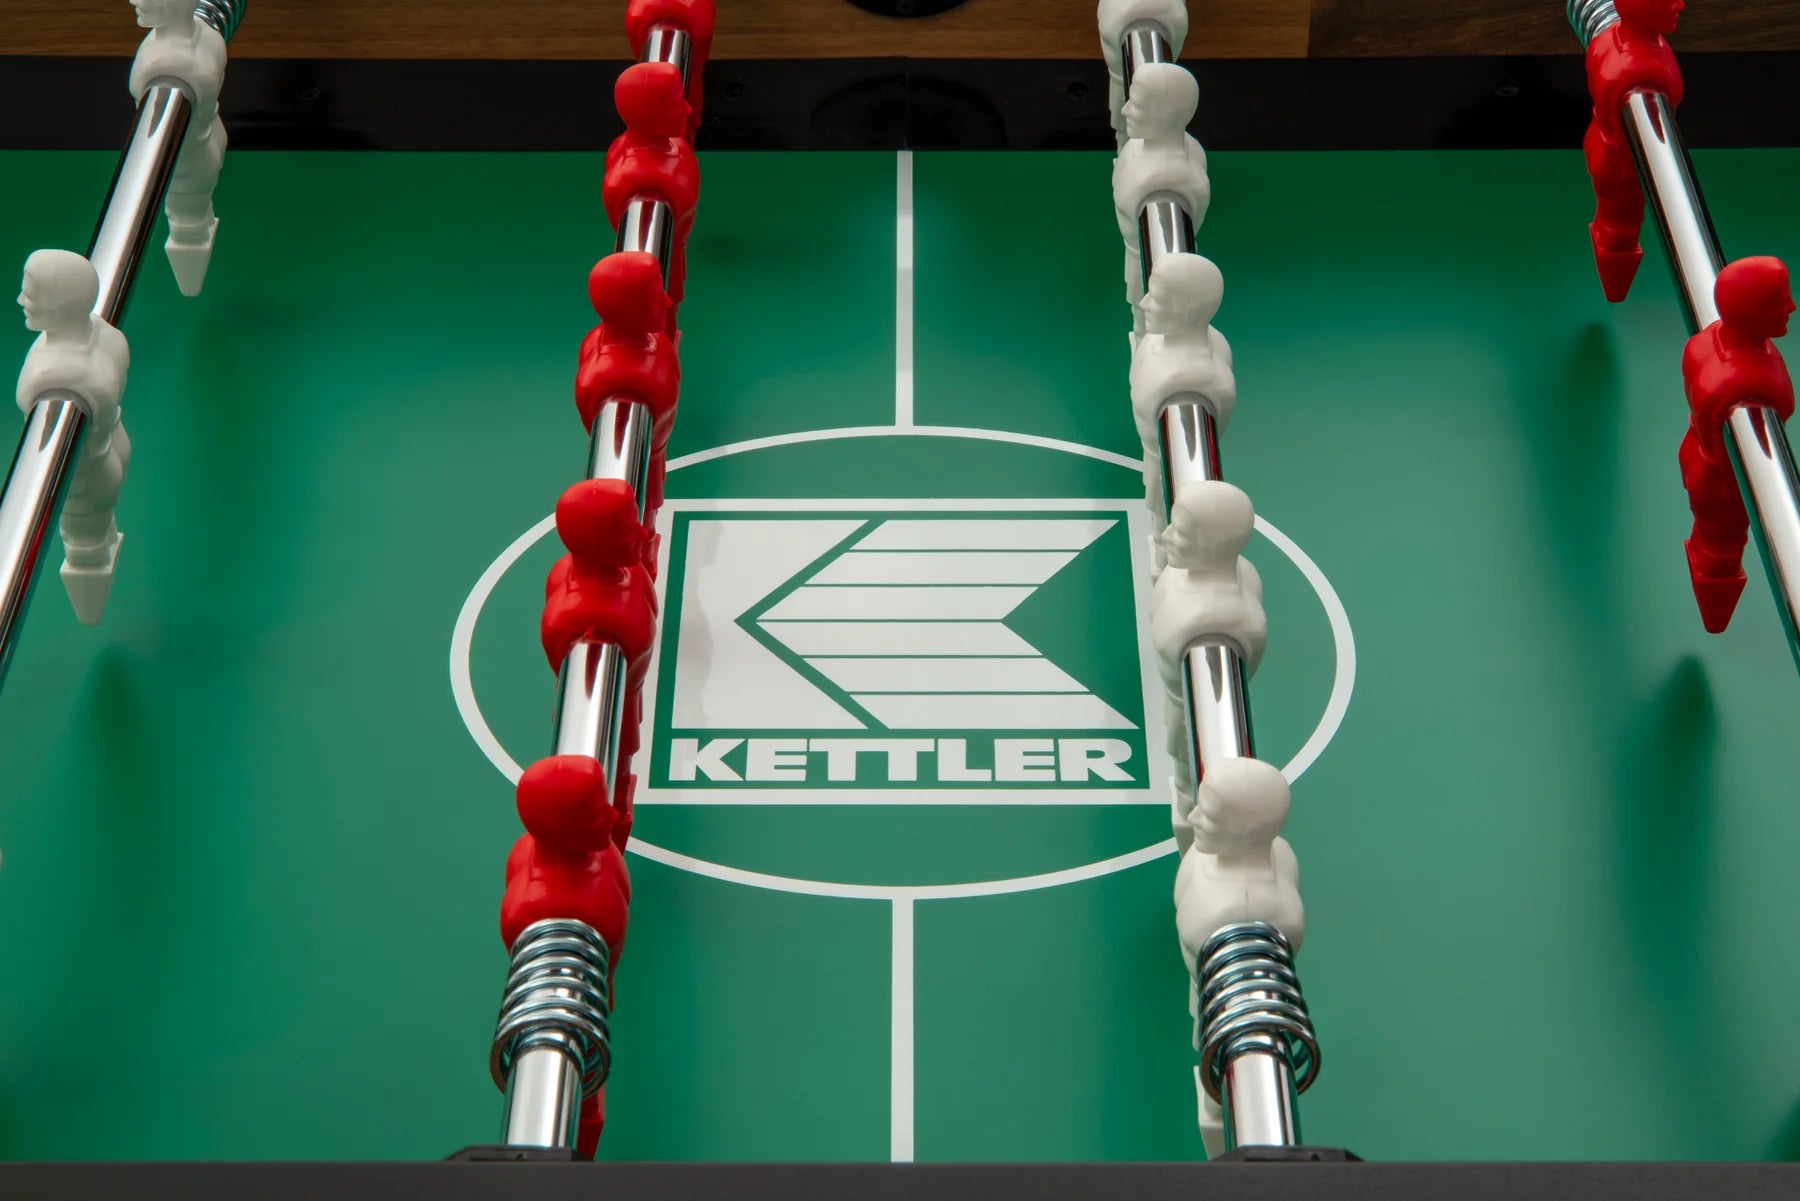 KETTLER Indoor Campus Foosball Table - Prime Arcades Inc